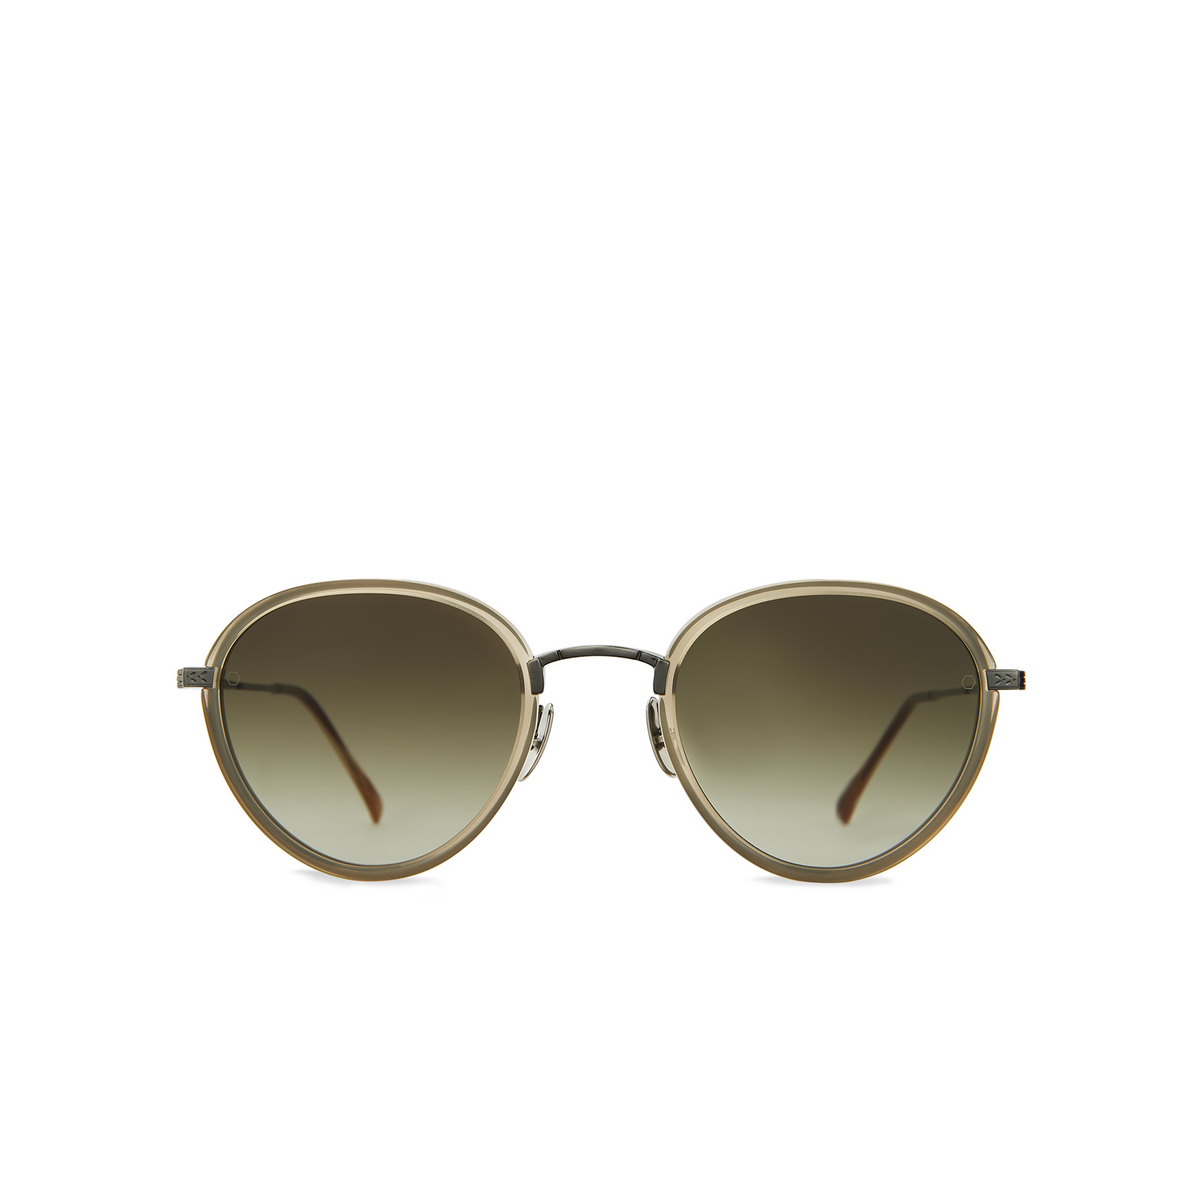 Mr. Leight® Round Sunglasses: Monterey Sl color Summit / Elm + Beachwood / Bluelight Smt/elm+bw/blul - front view.